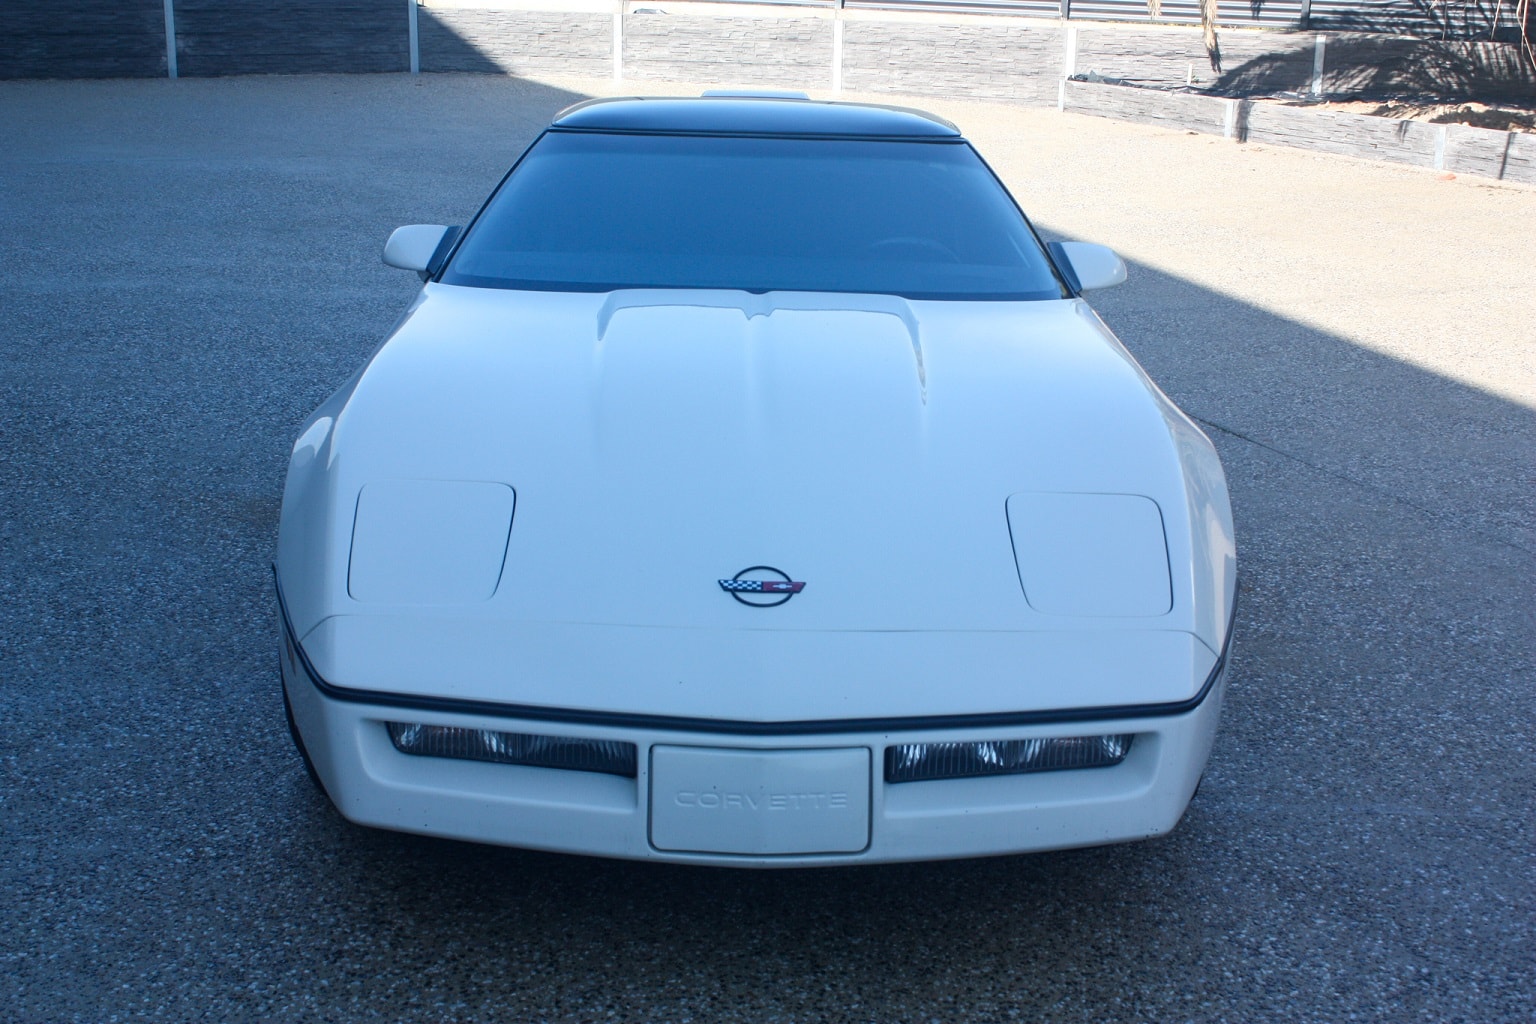 1987 Chevrolet Corvette white